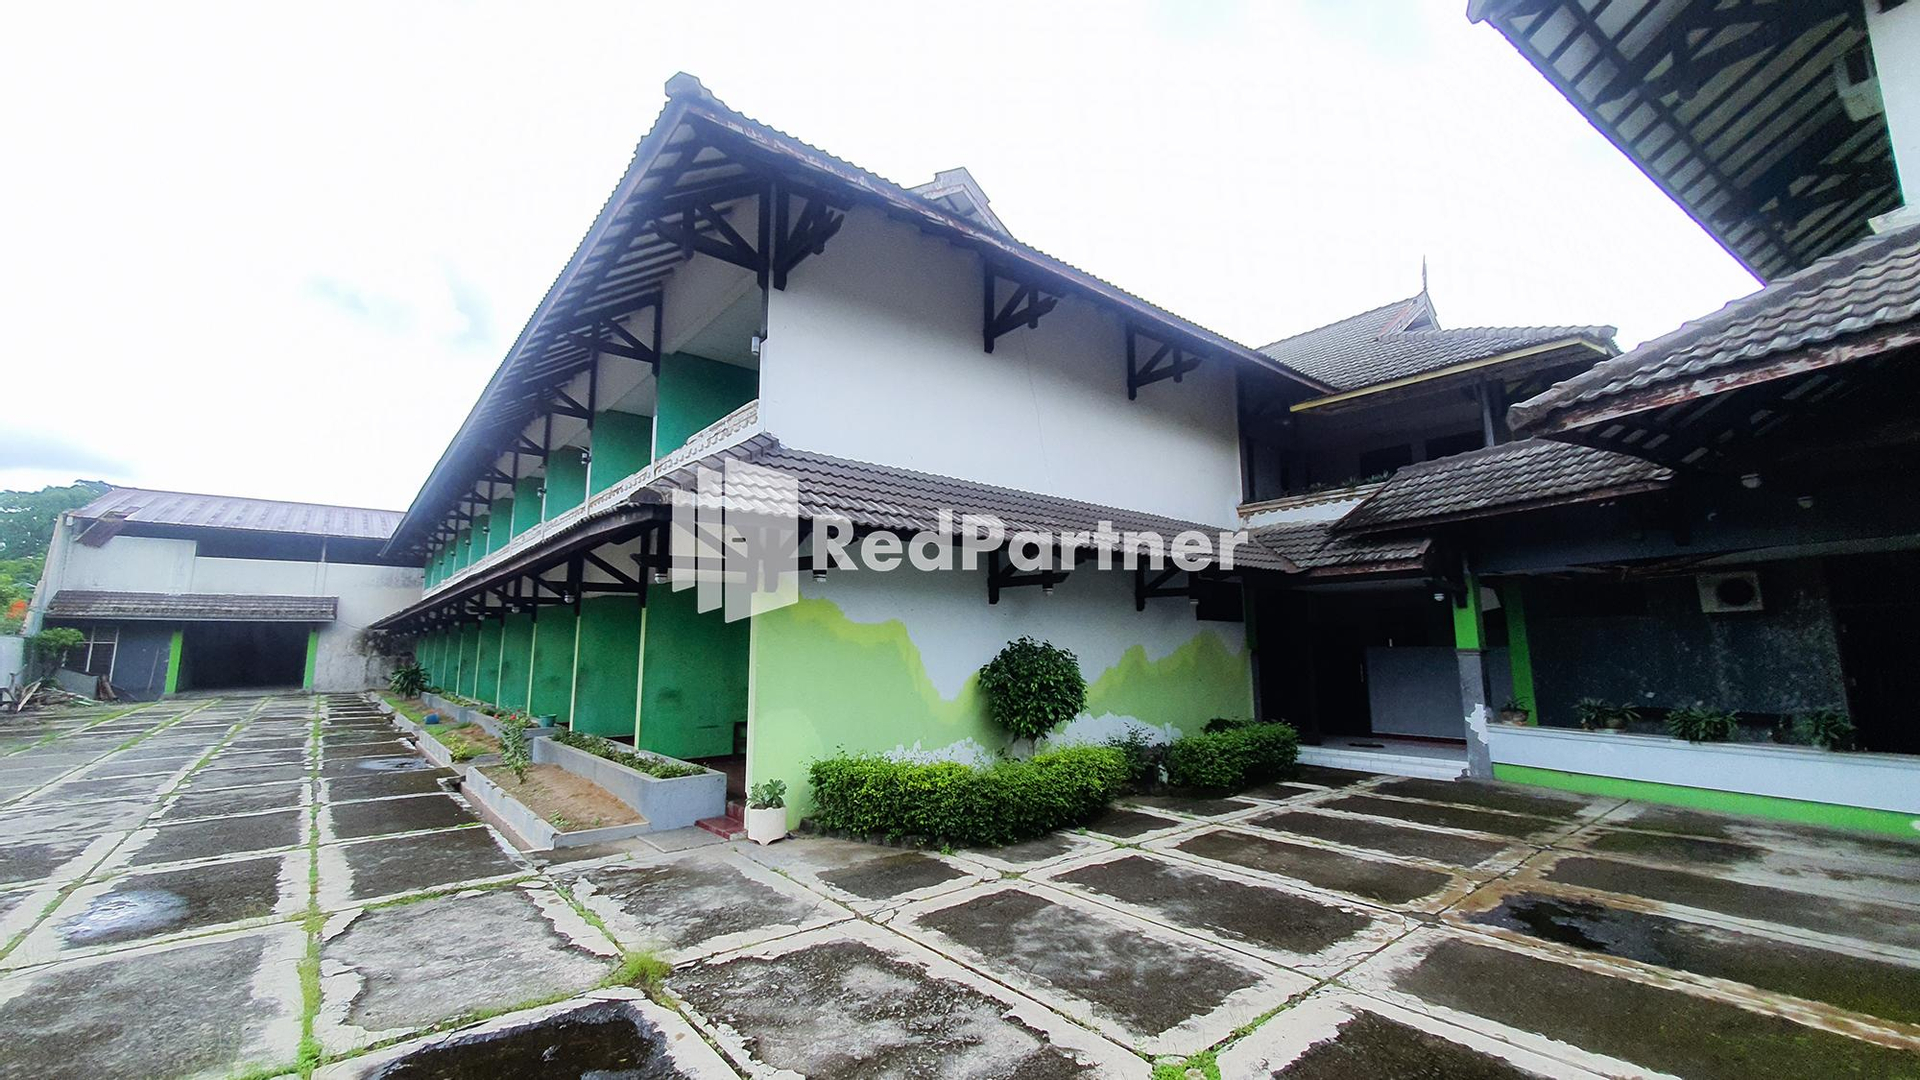 Exterior & Views 5, Hotel Pondok Indah RedPartner, Madiun